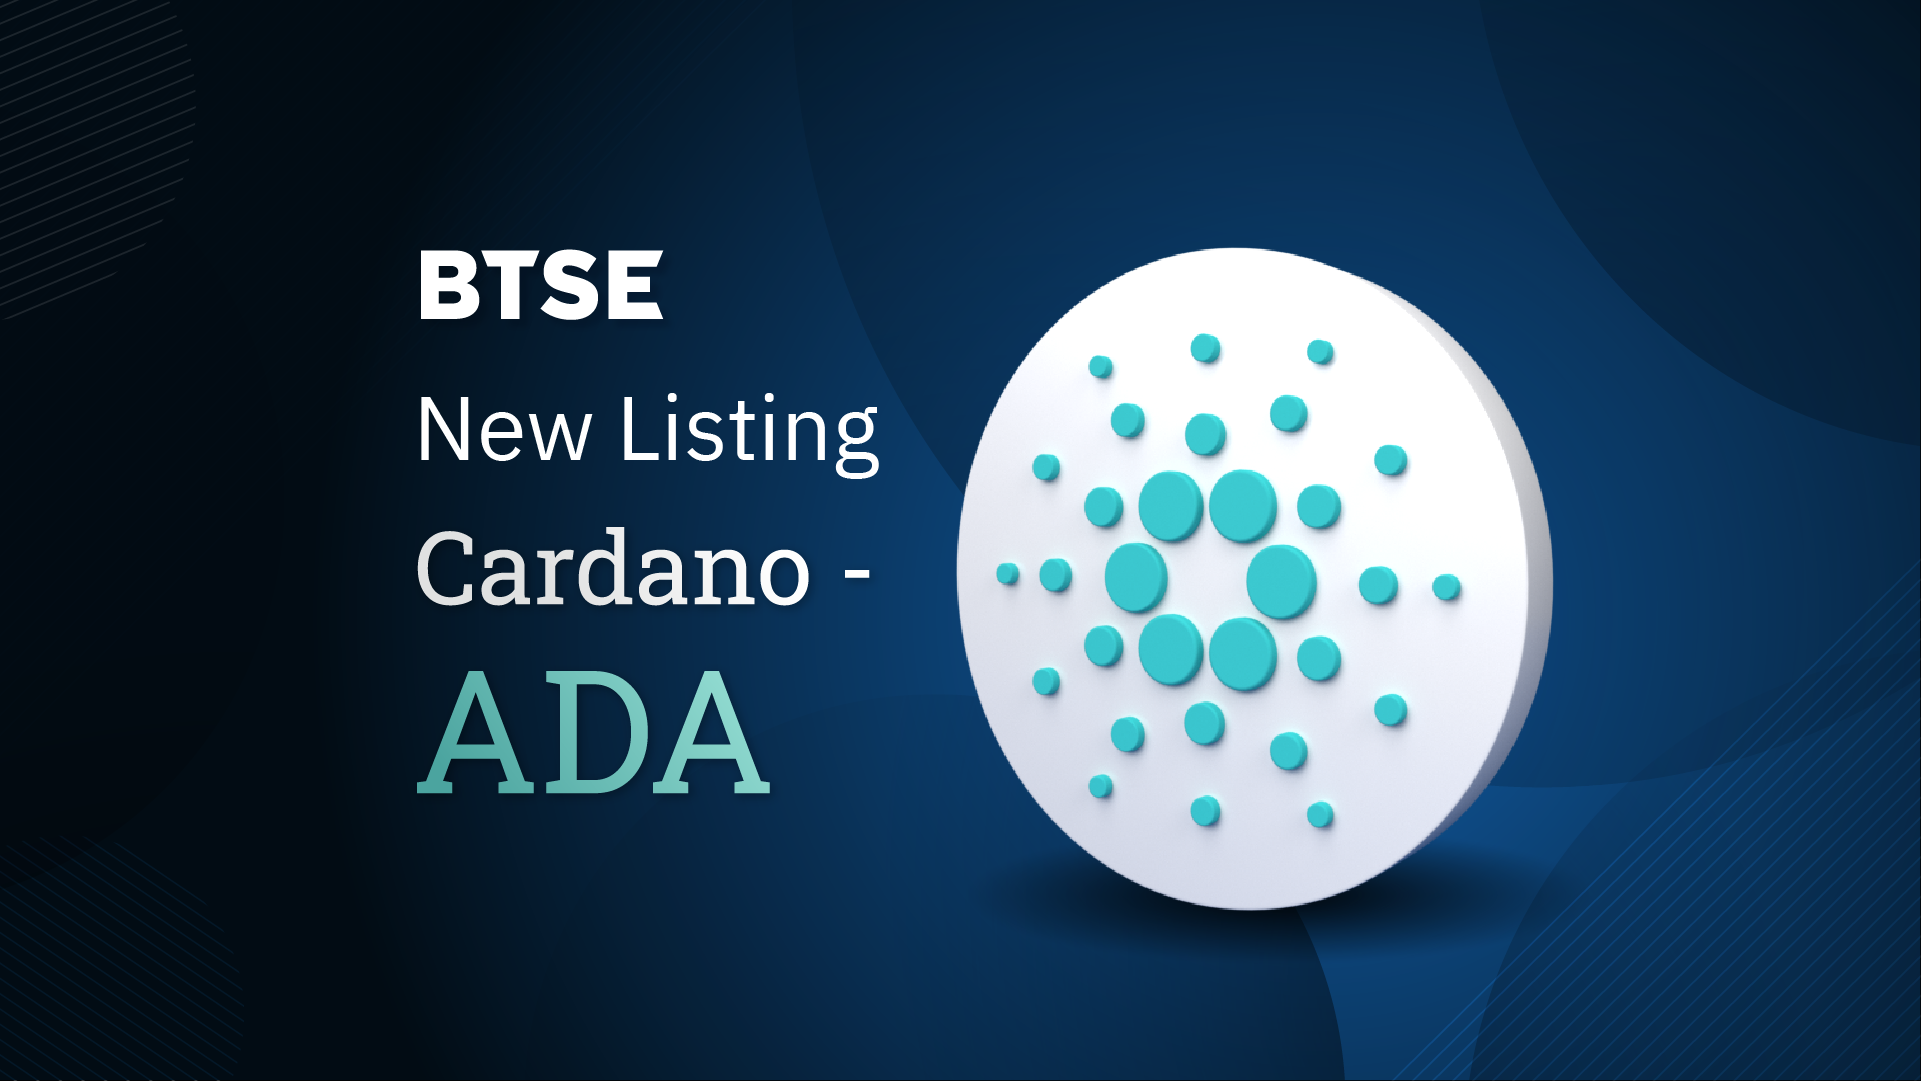 BTSE Integrates Cardano Blockchain, adds ADA to Its Crypto Trading List